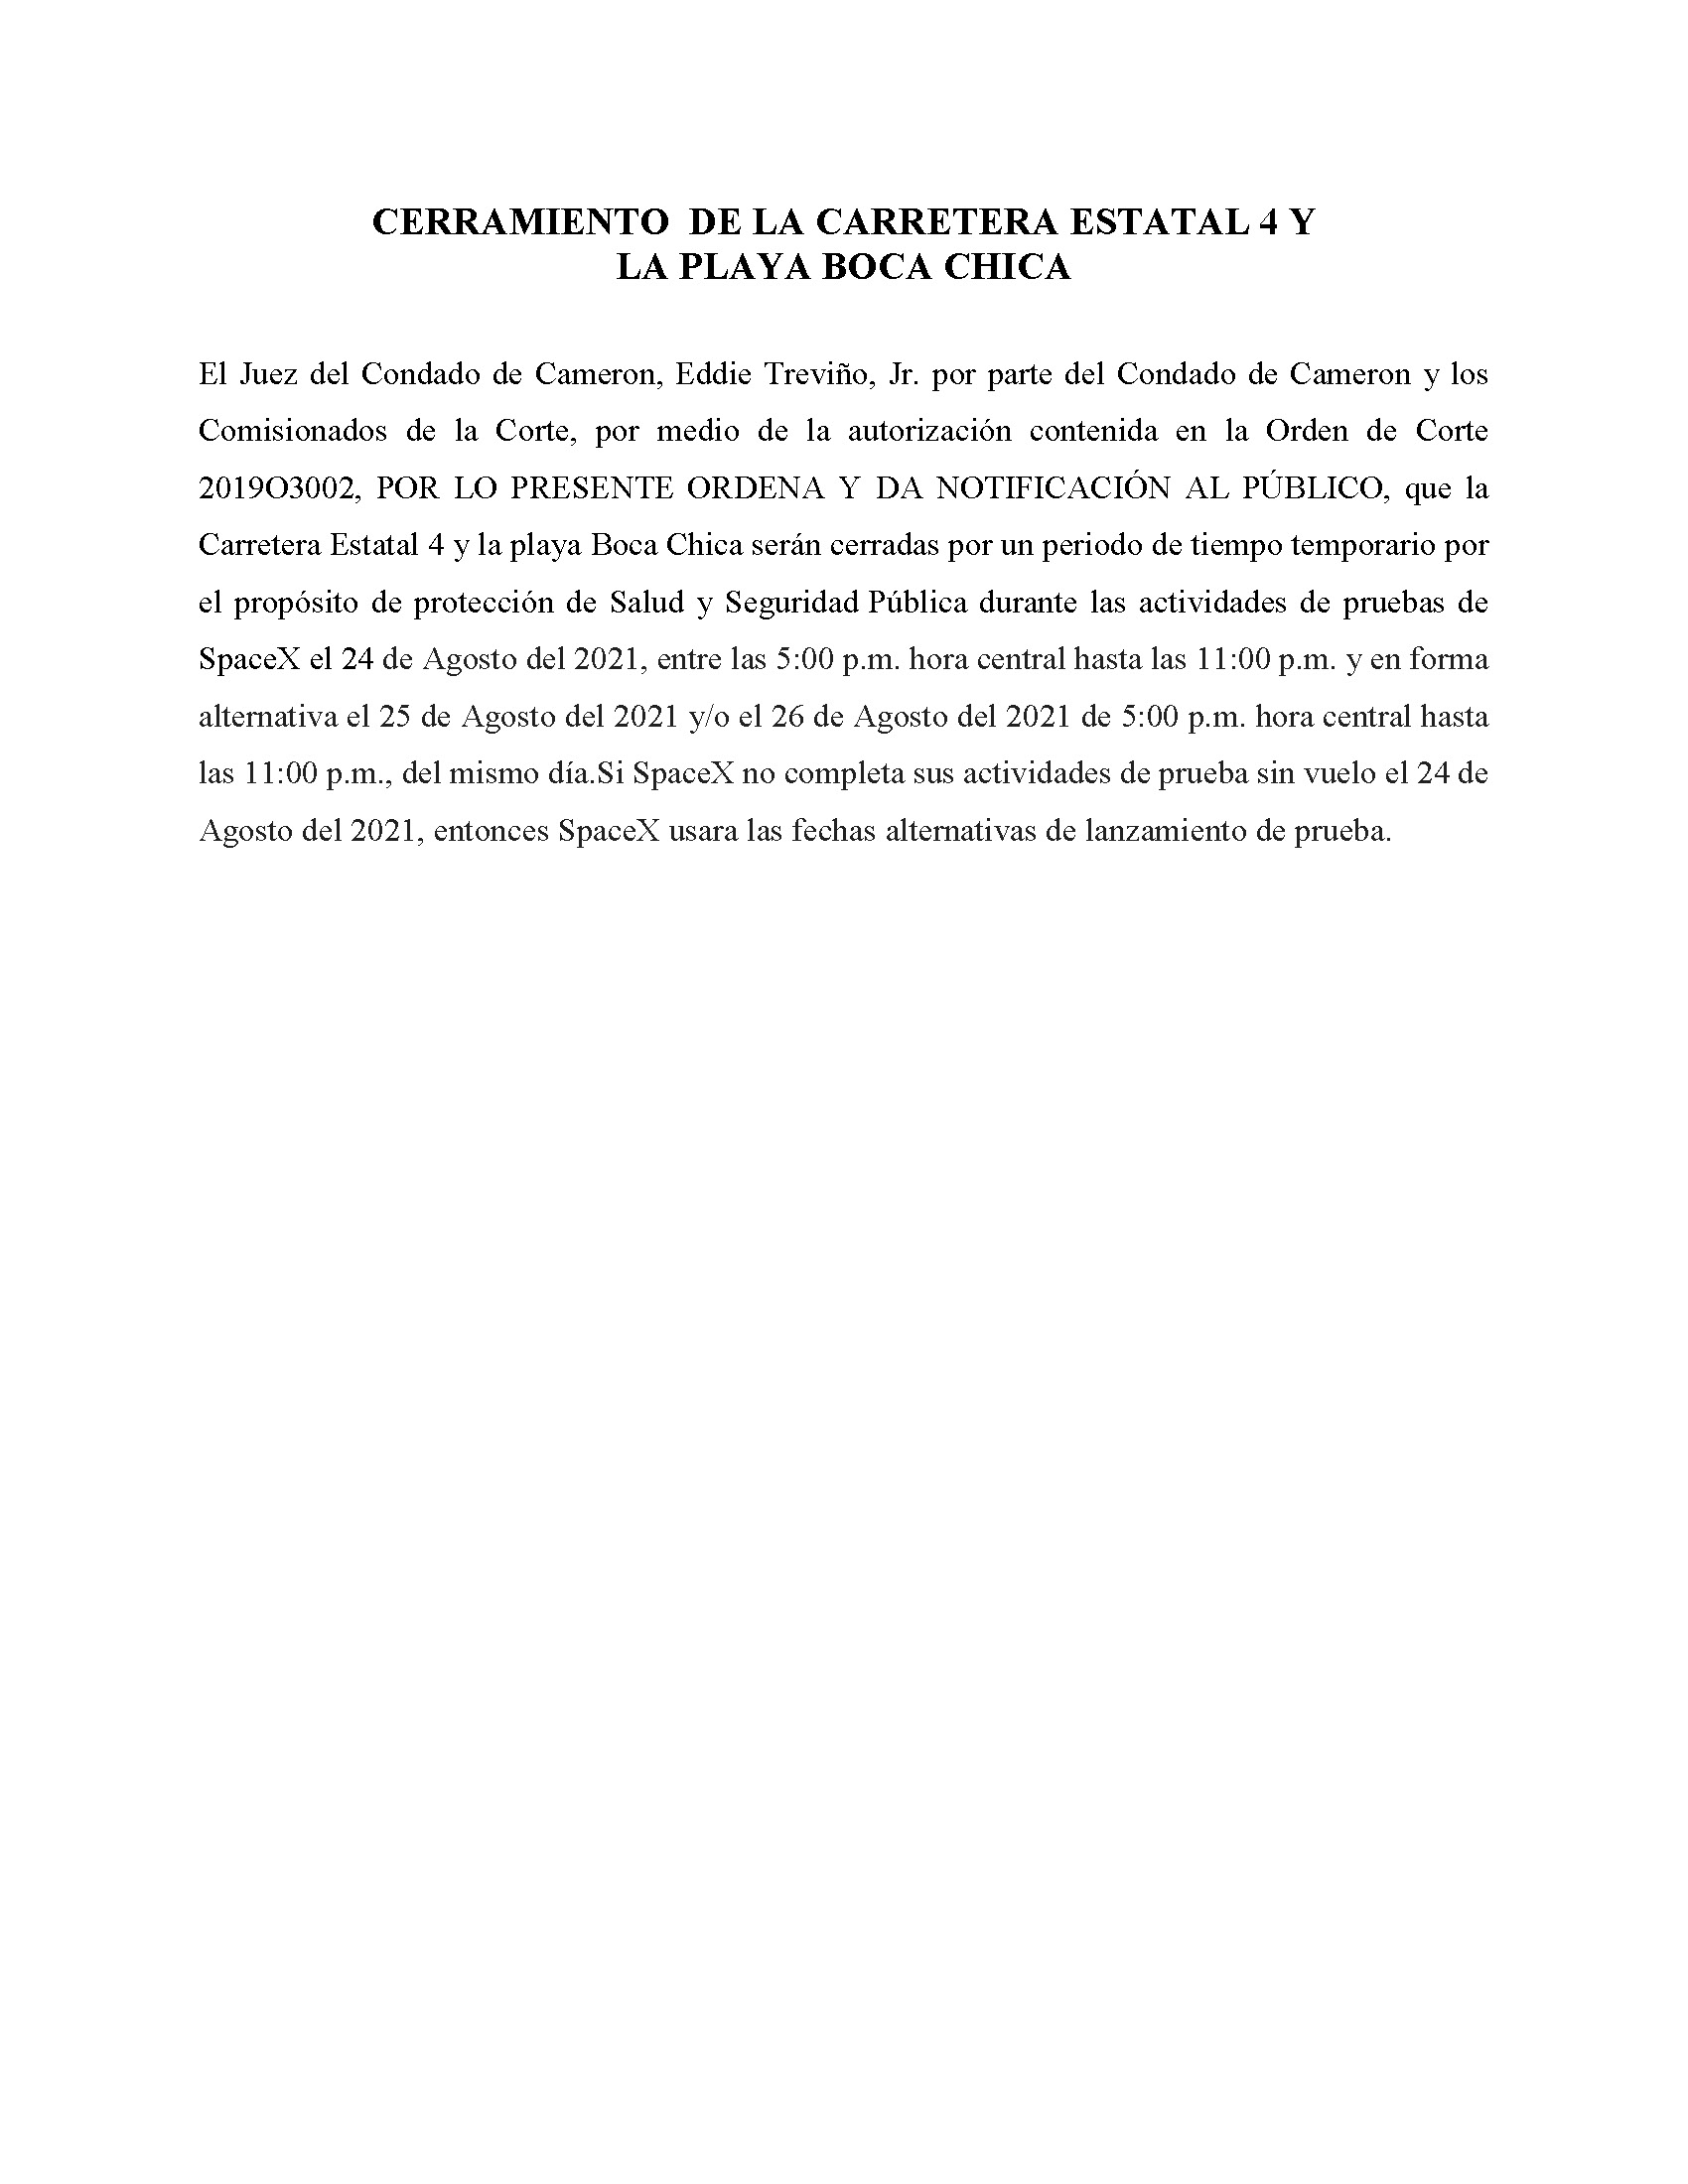 ORDER.CLOSURE OF HIGHWAY 4 Y LA PLAYA BOCA CHICA.SPANISH.08.24.2021